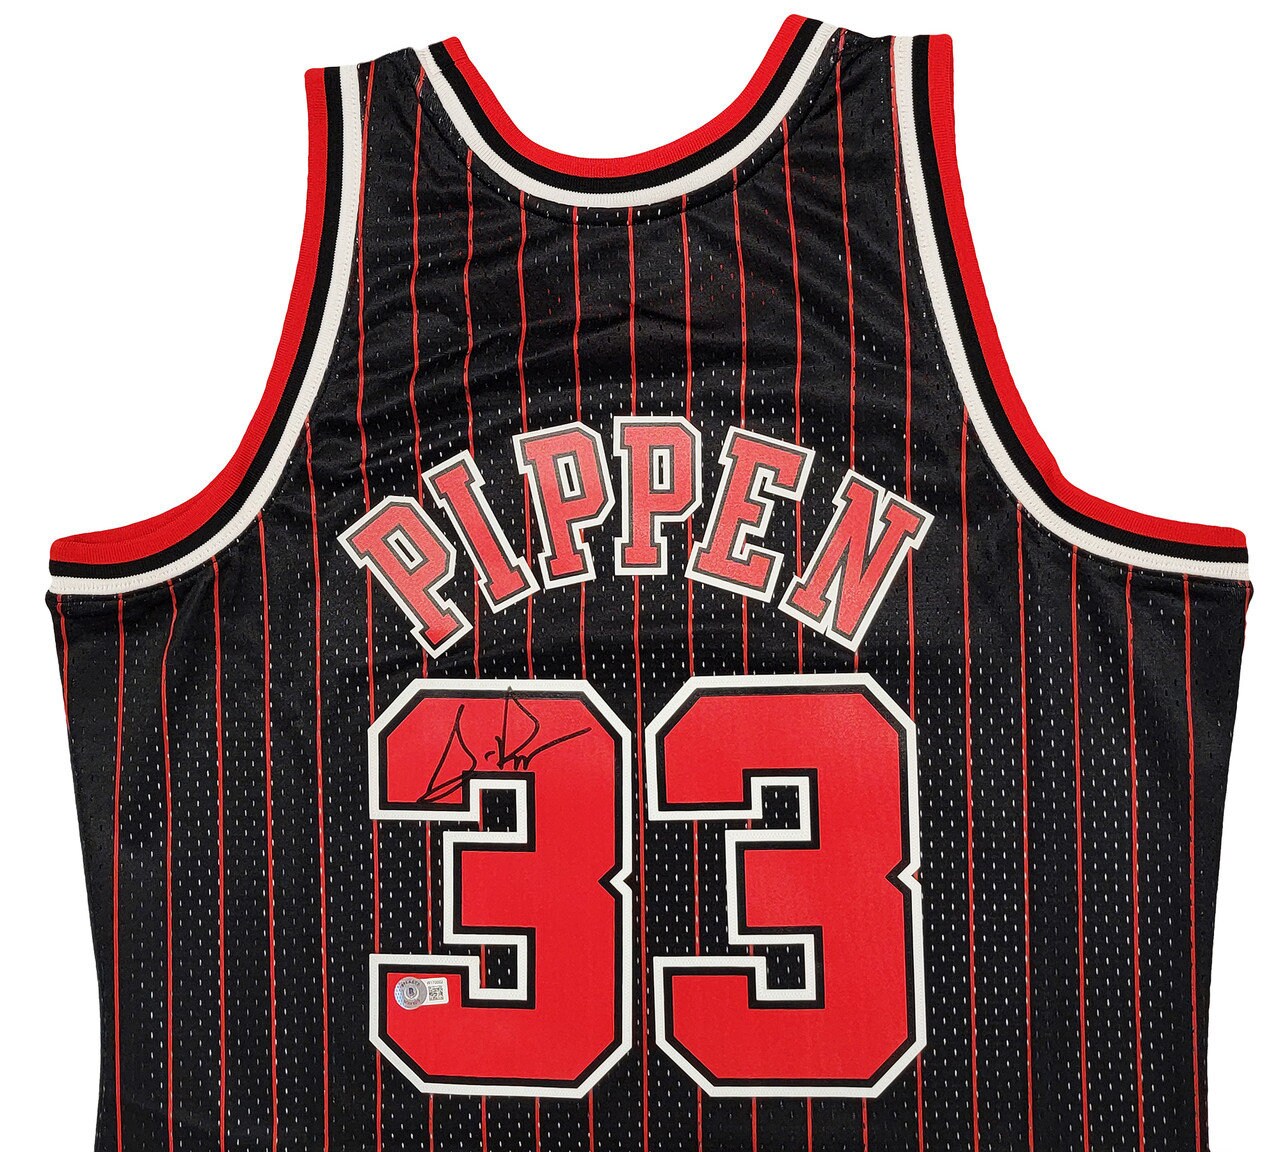 Vintage Chicago Bulls 72 Wins 1996 T-Shirt NBA Basketball Pippen